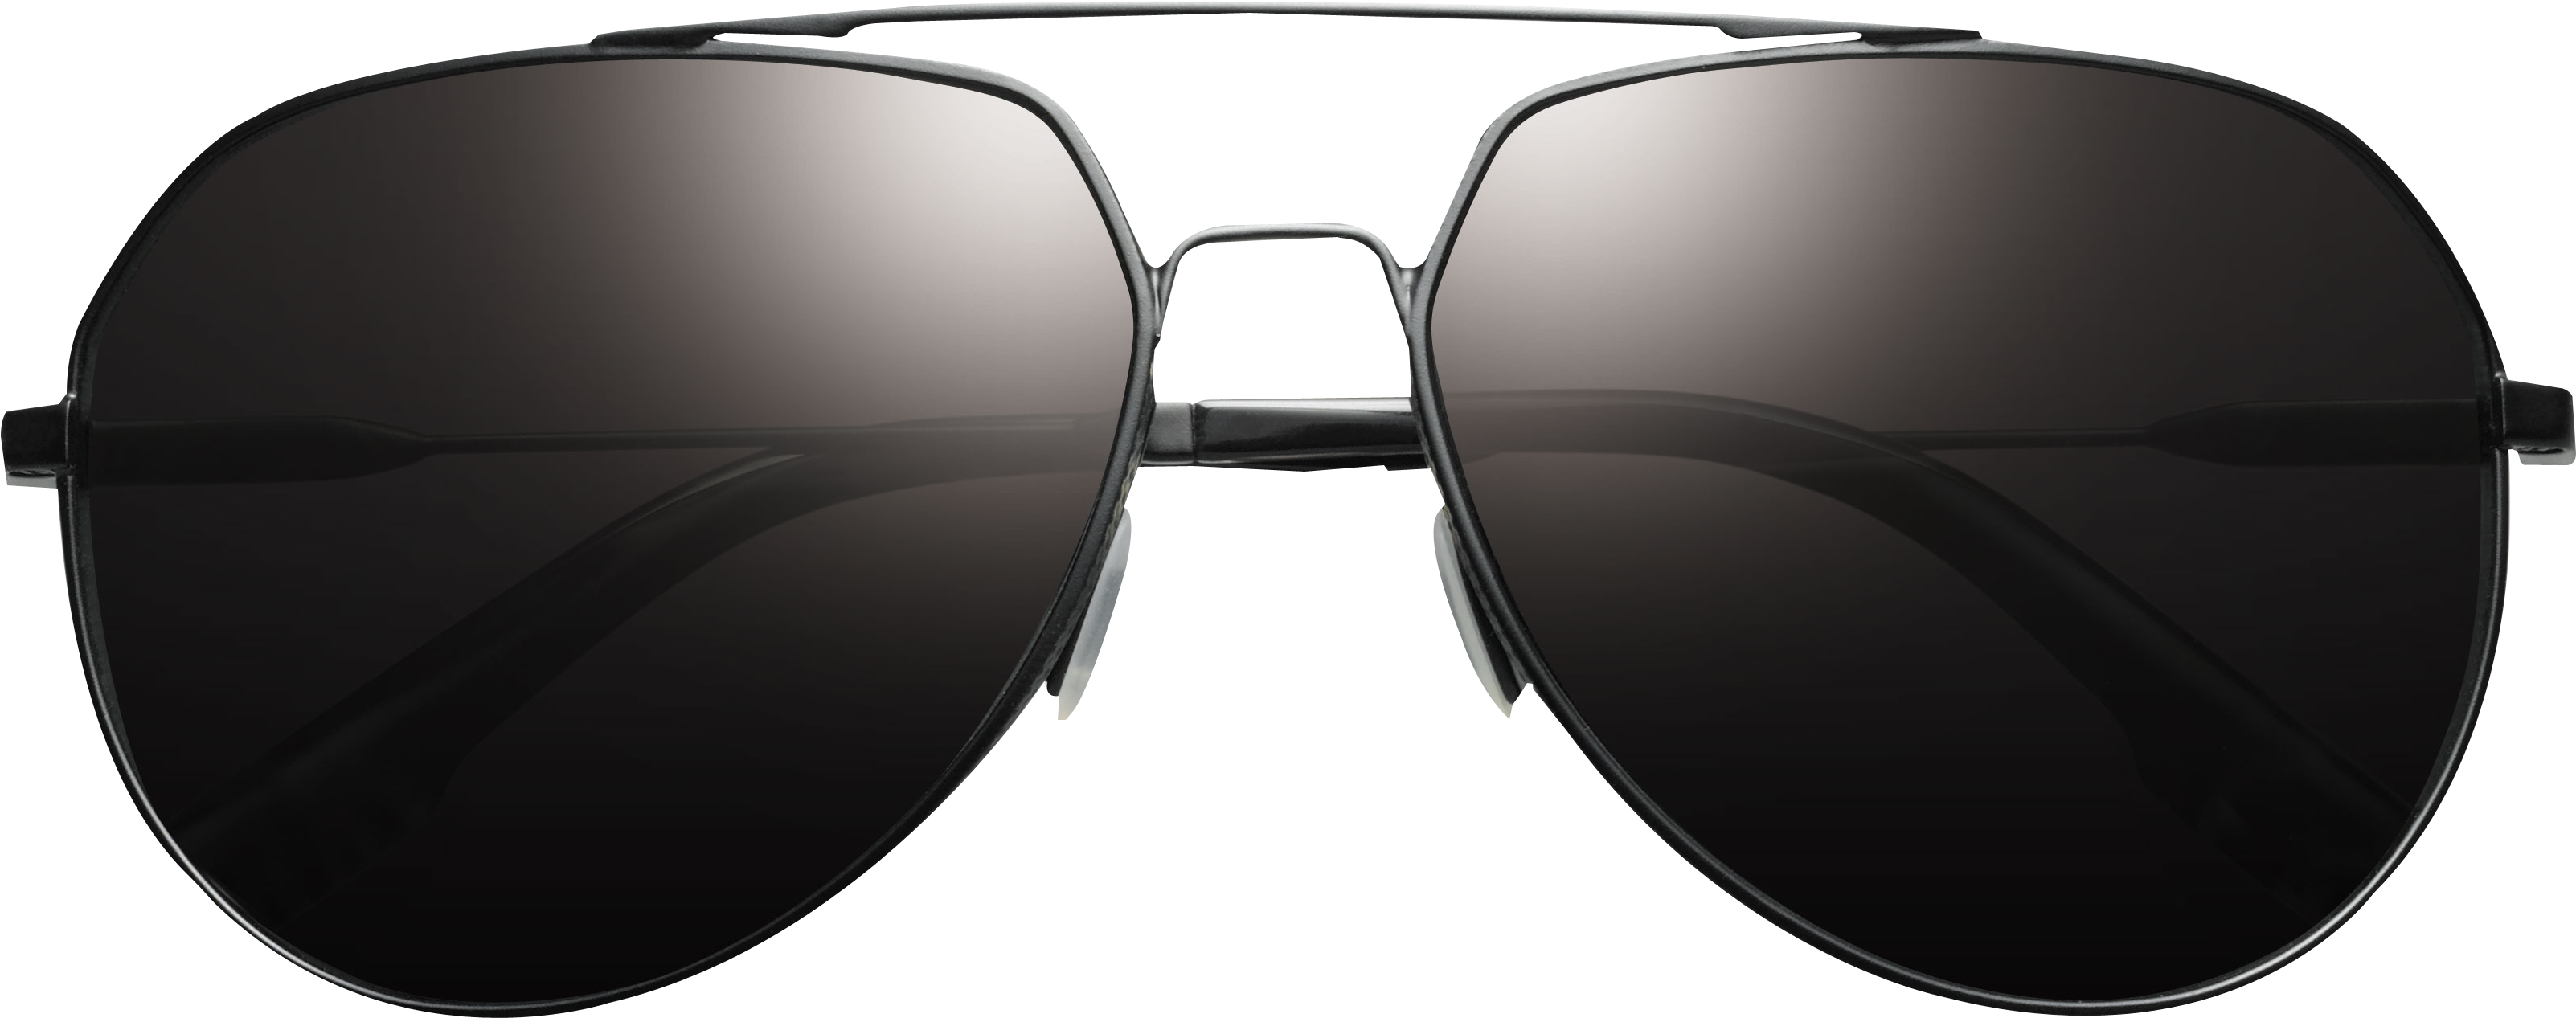 Aviator Sunglasses Clip Art Transparent Background Sunglasses Black